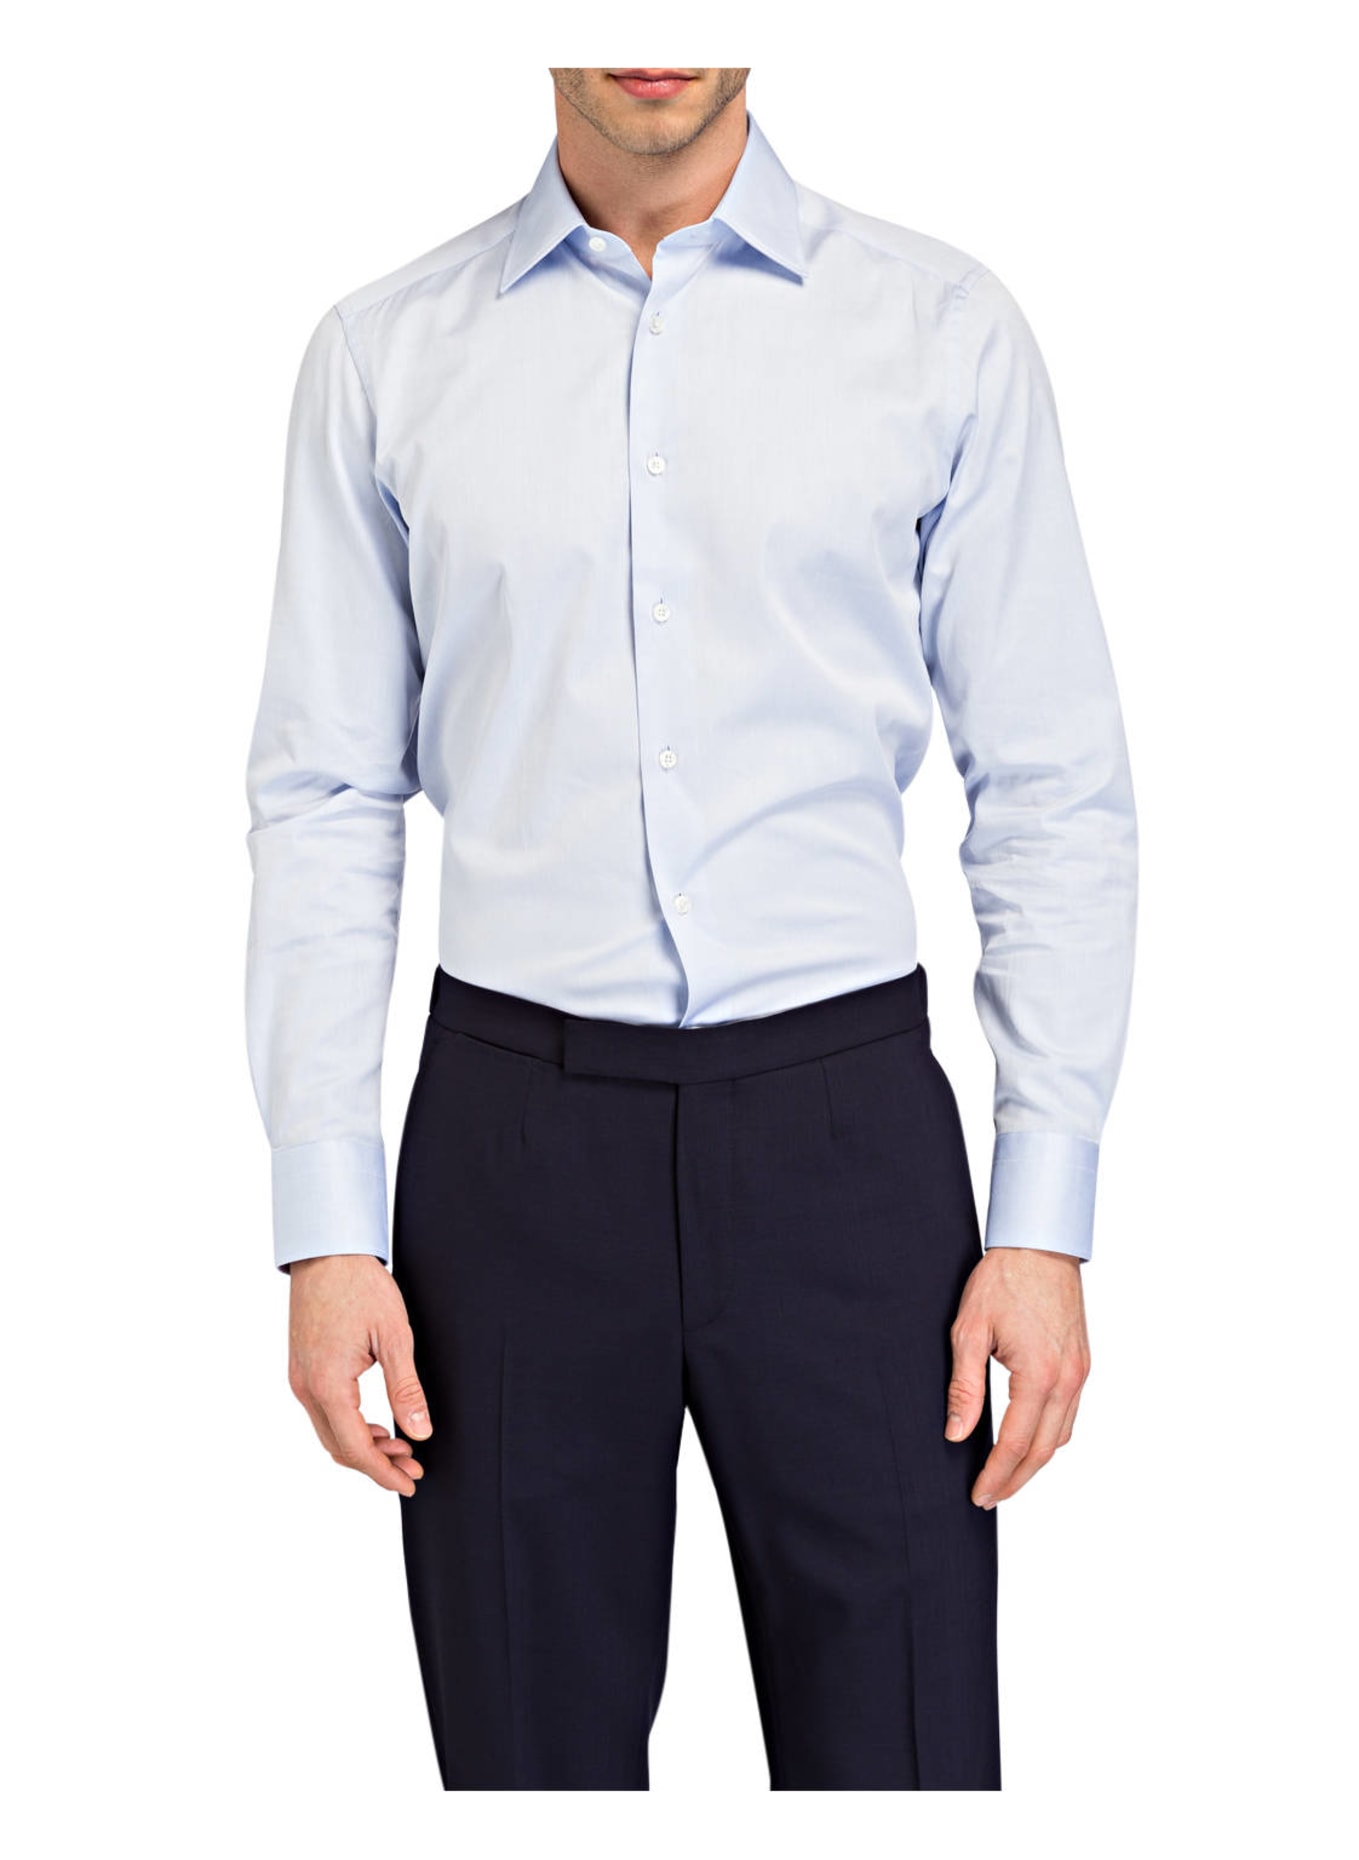 ZEGNA Shirt tailored fit, Color: LIGHT BLUE (Image 2)